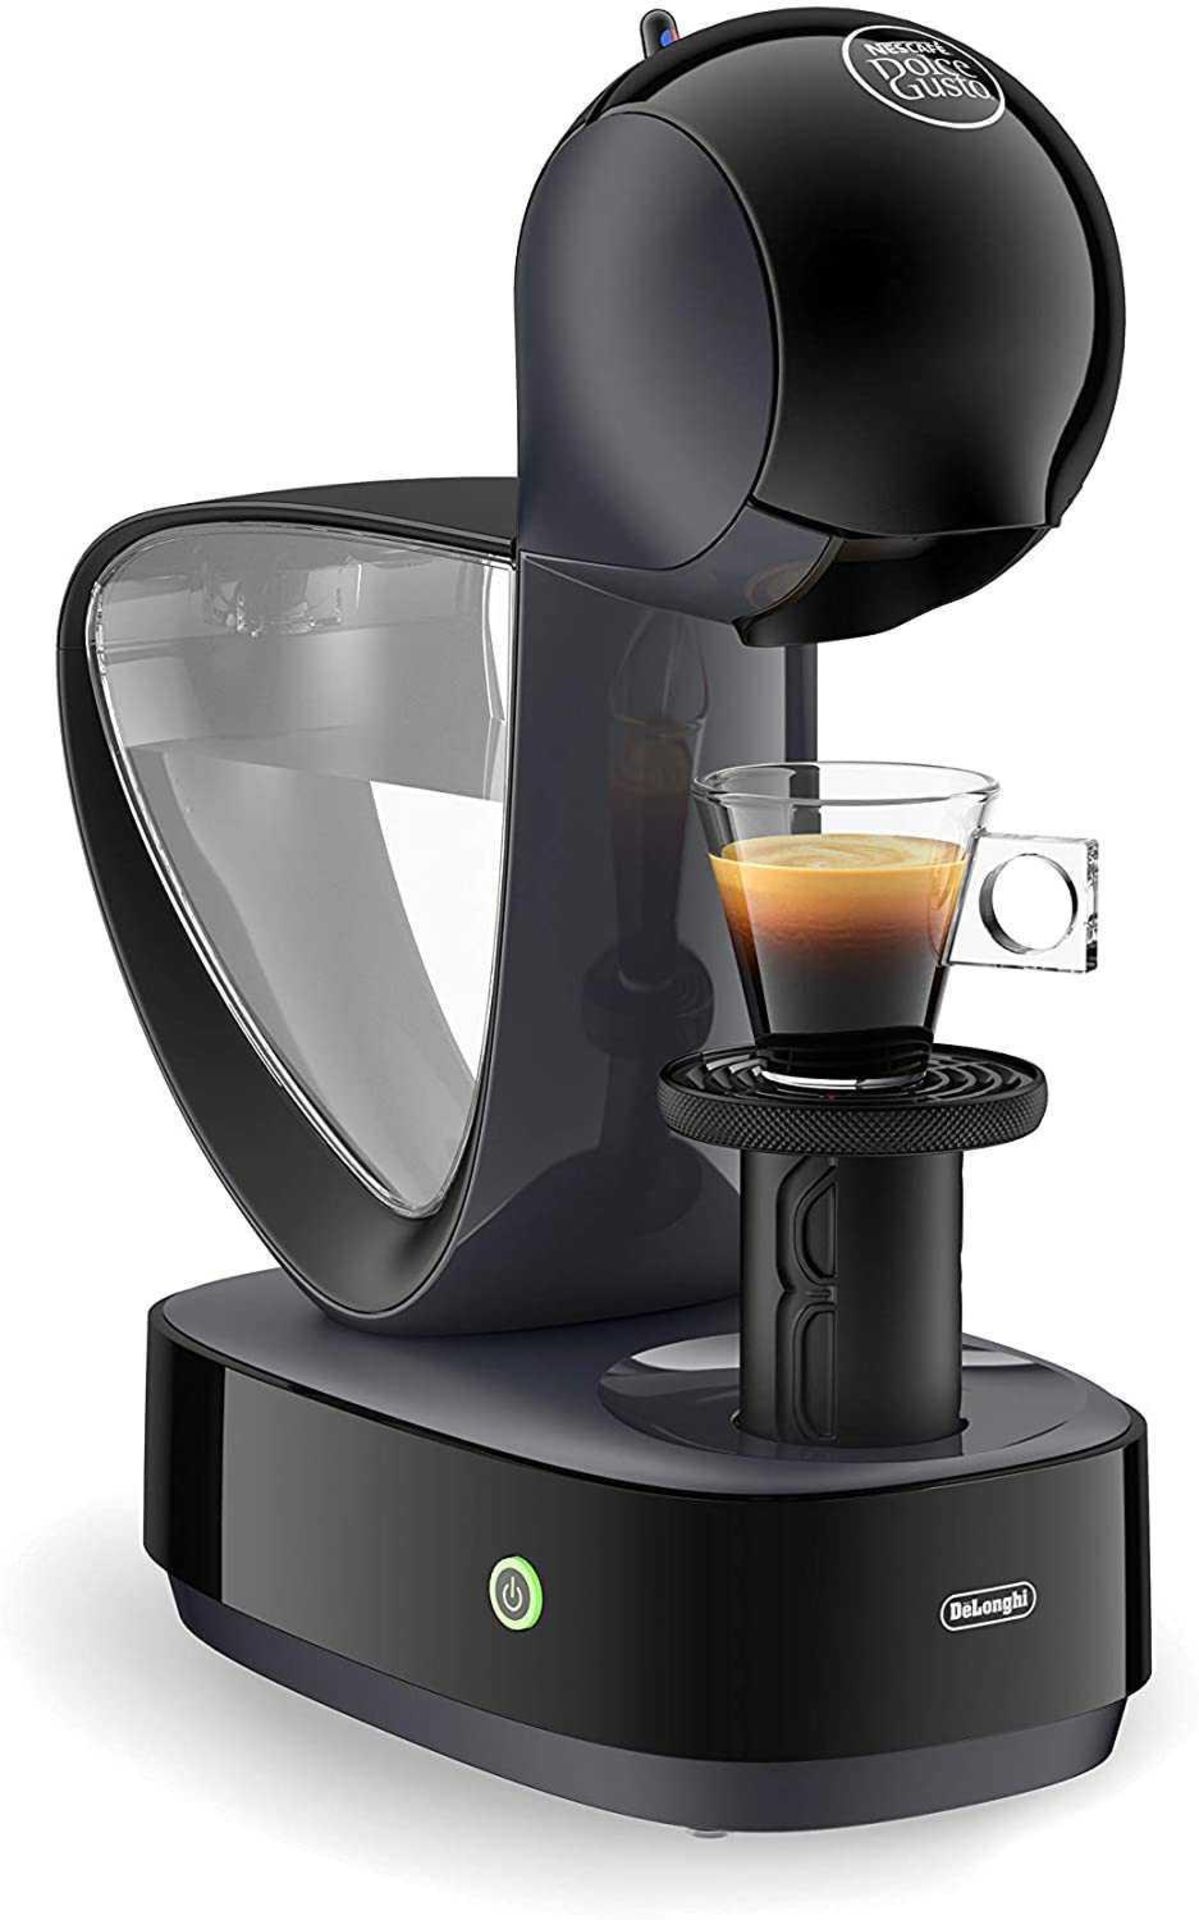 RRP £120 Boxed Nescafe Dolce Gusto Delonghi Infinissima Coffee Machine